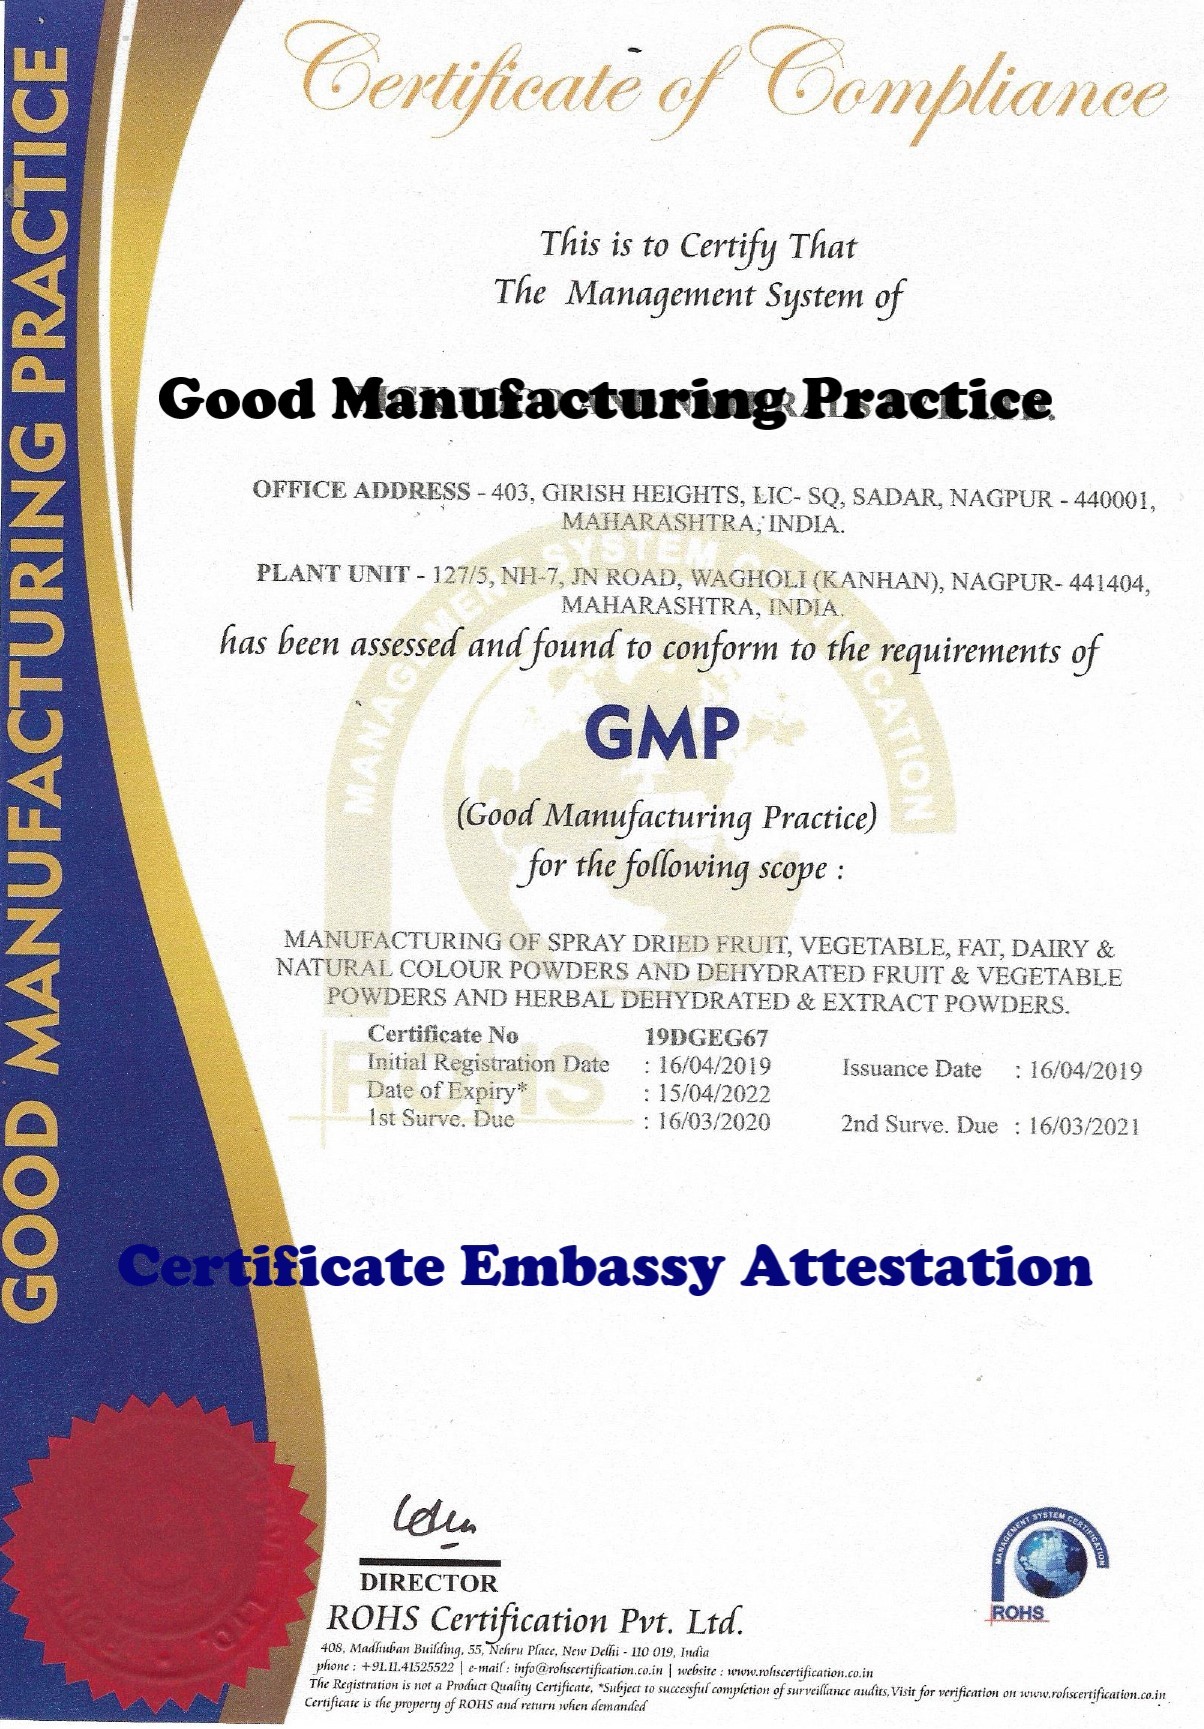 GMP Certificate Attestation from Sri Lanka Embassy